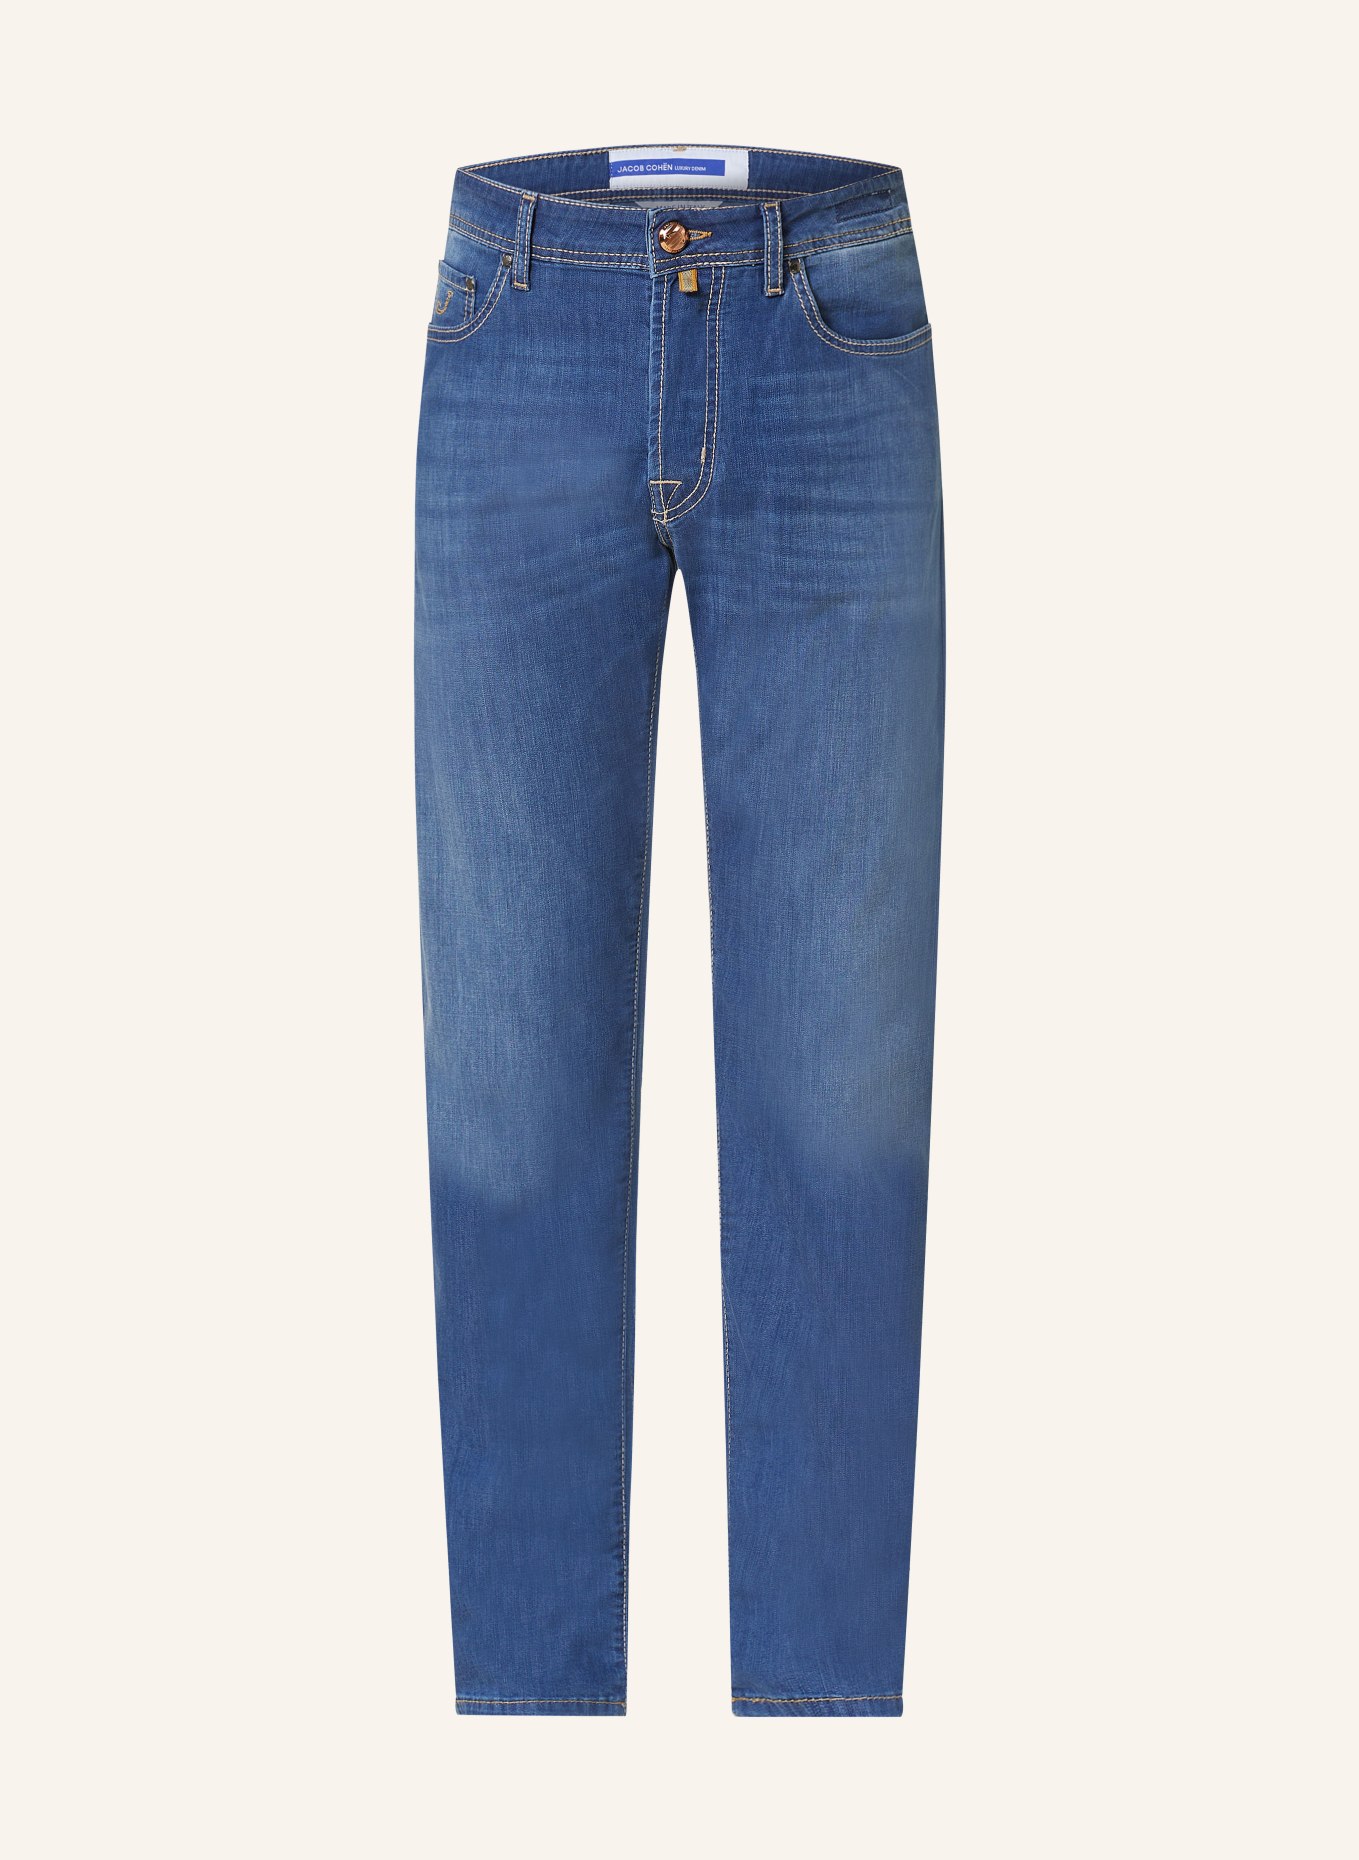 JACOB COHEN Jeans BARD Slim Fit, Farbe: 749D Mid Blue (Bild 1)